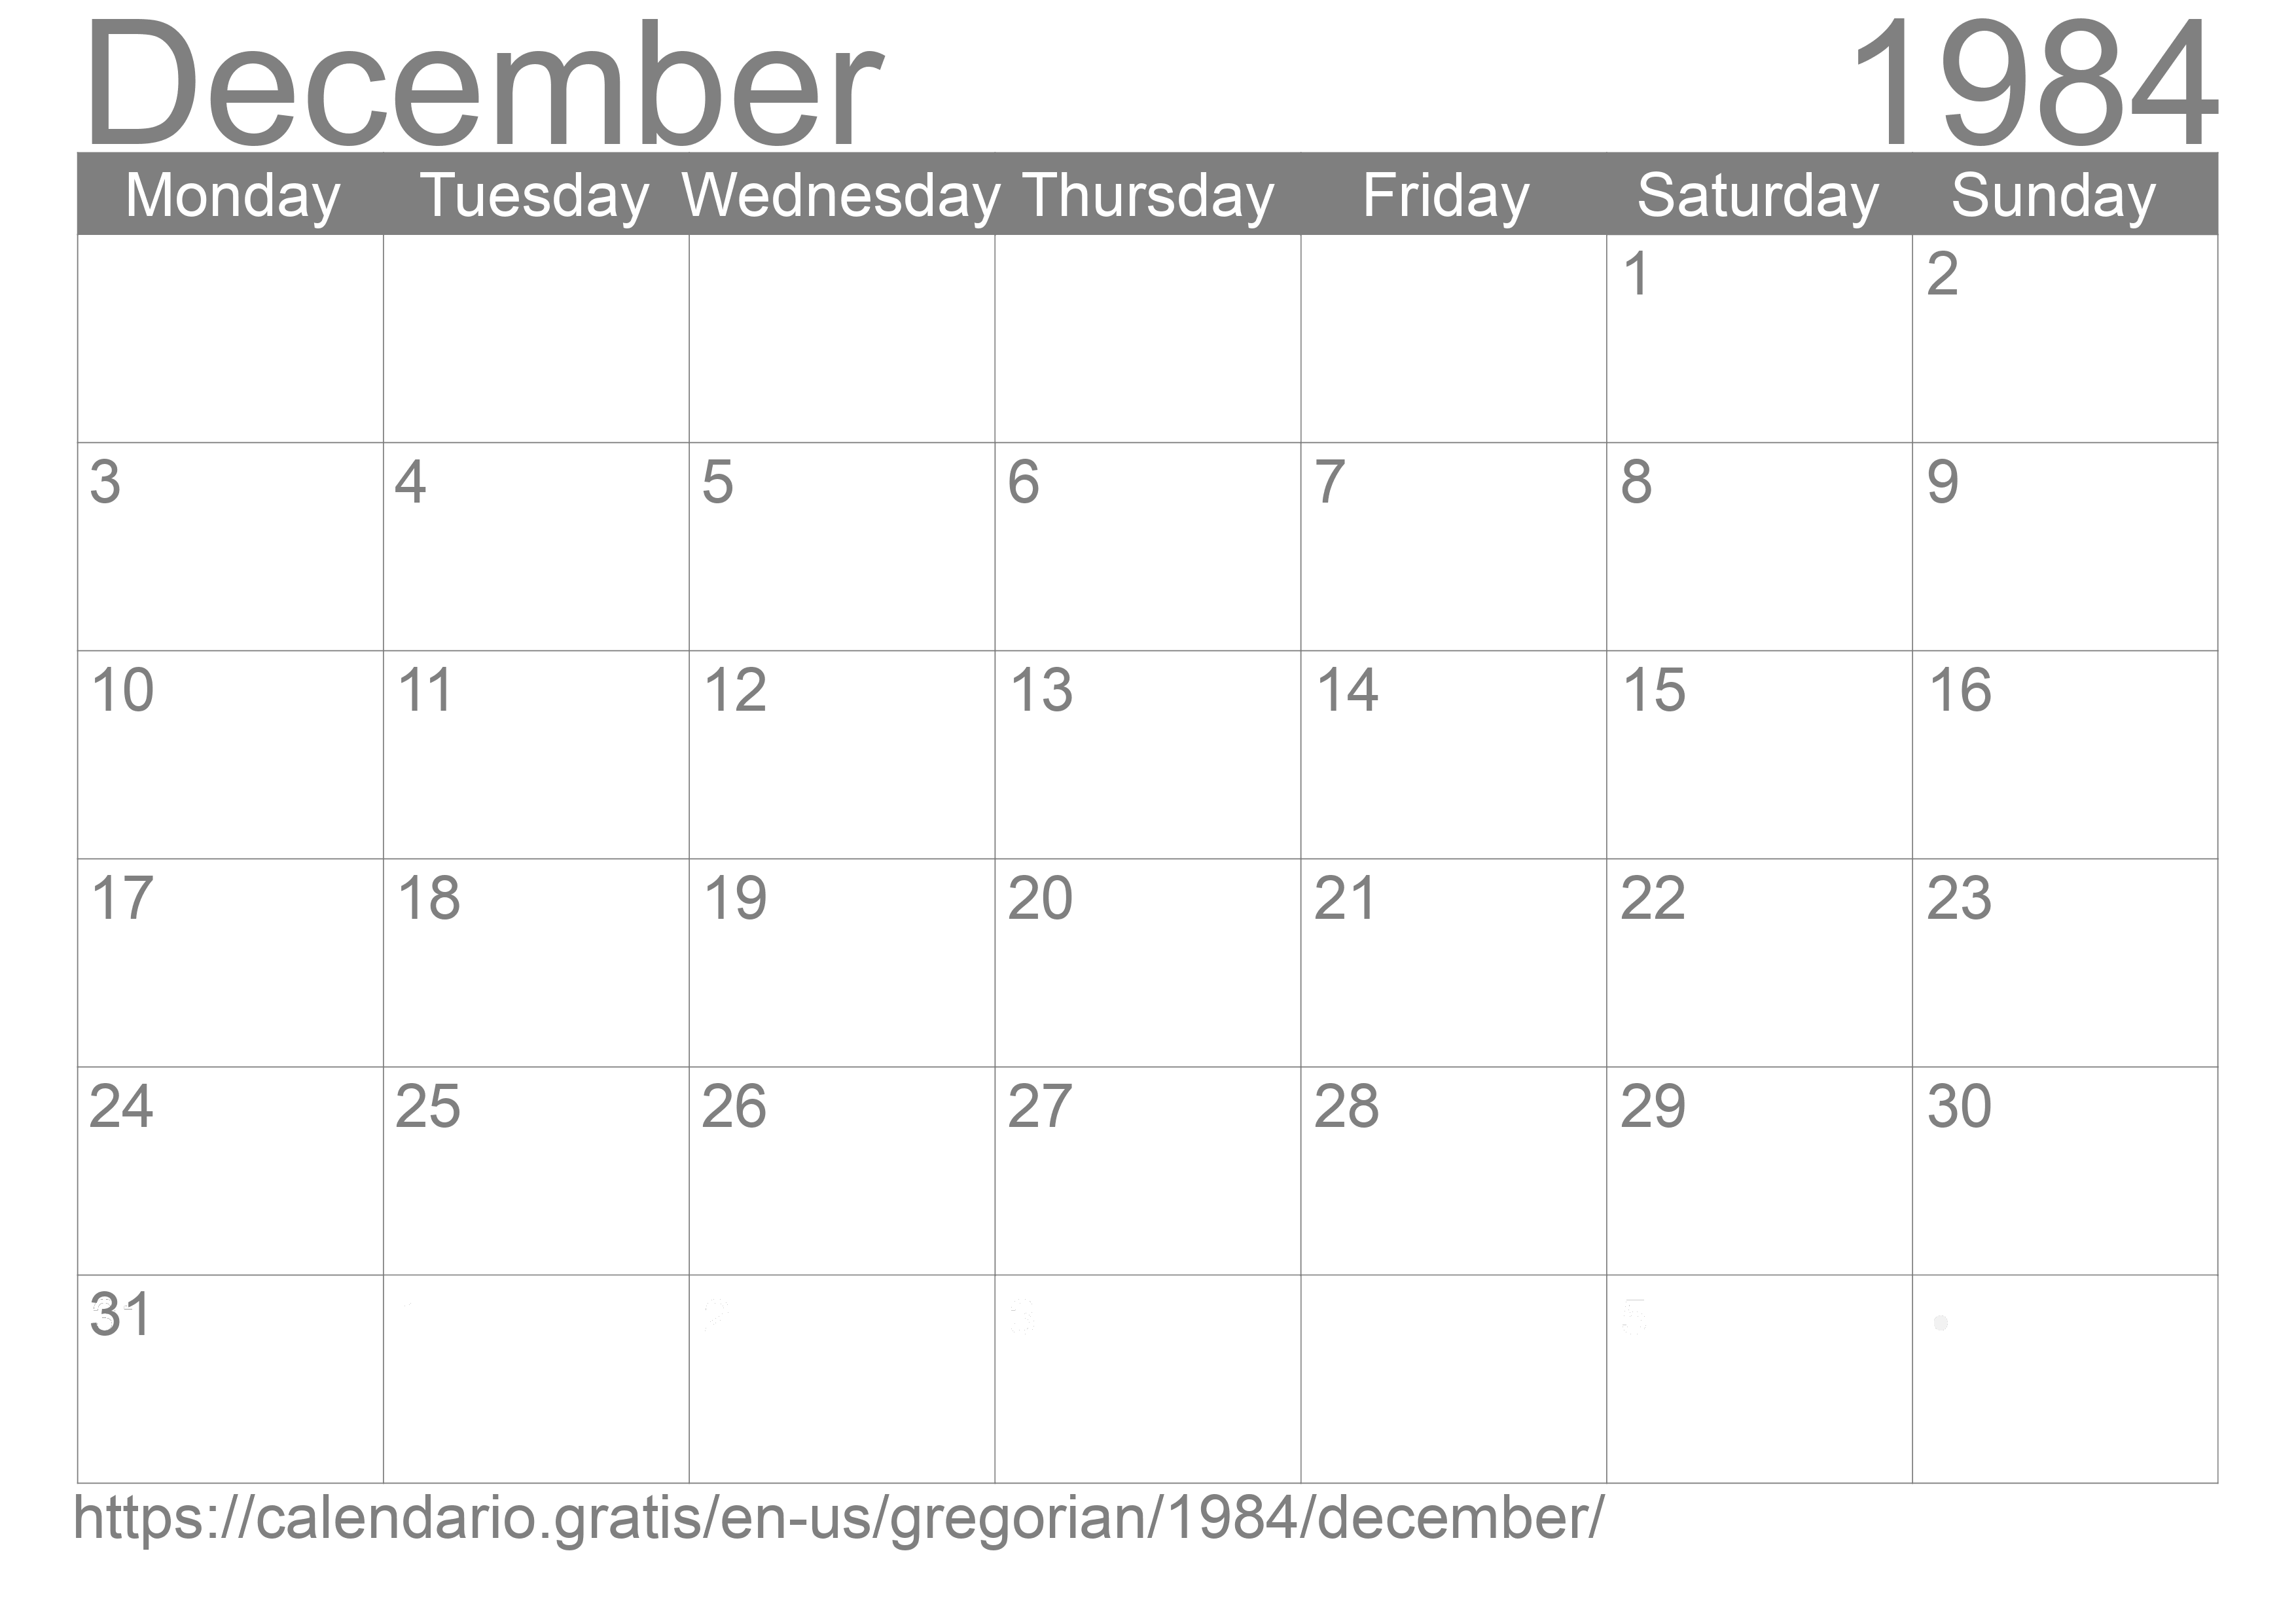 Calendar December 1984 to print